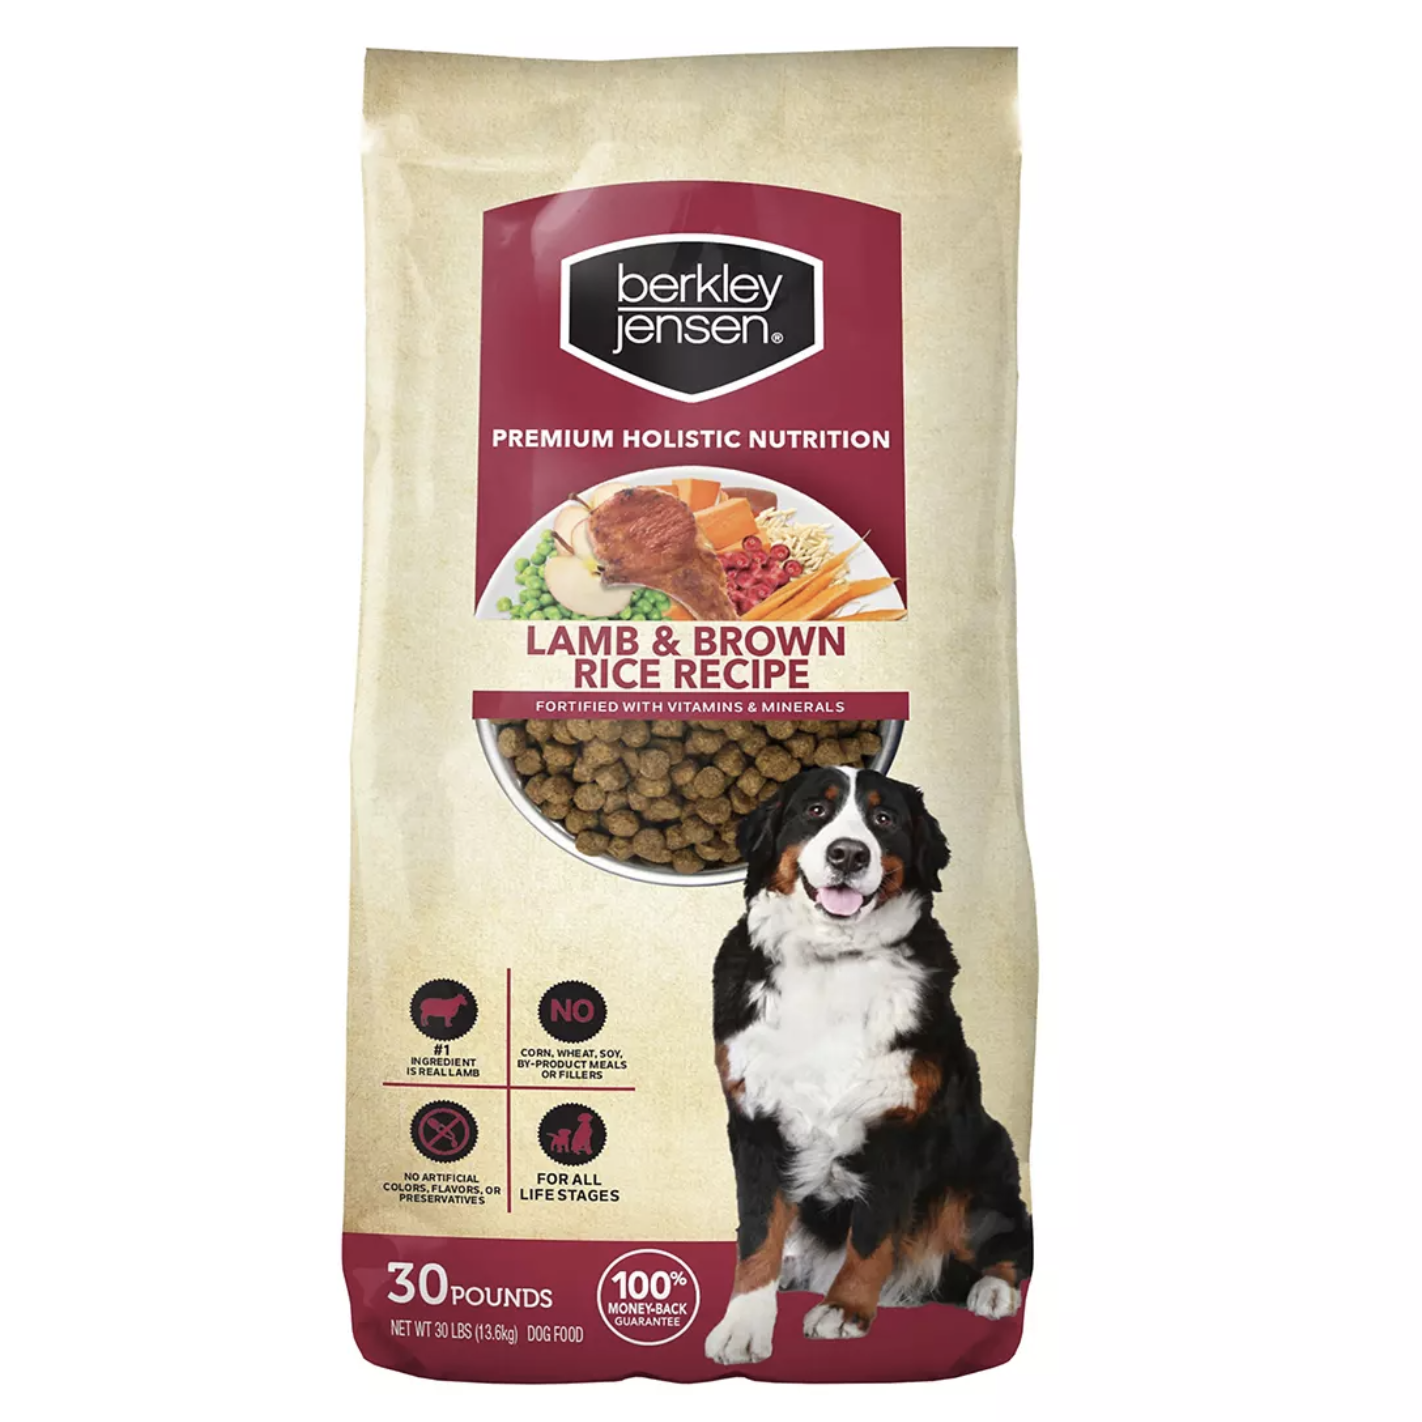 Berkley Jensen Premium Holistic Nutrition Dog Food (BJ's Wholesale Club)